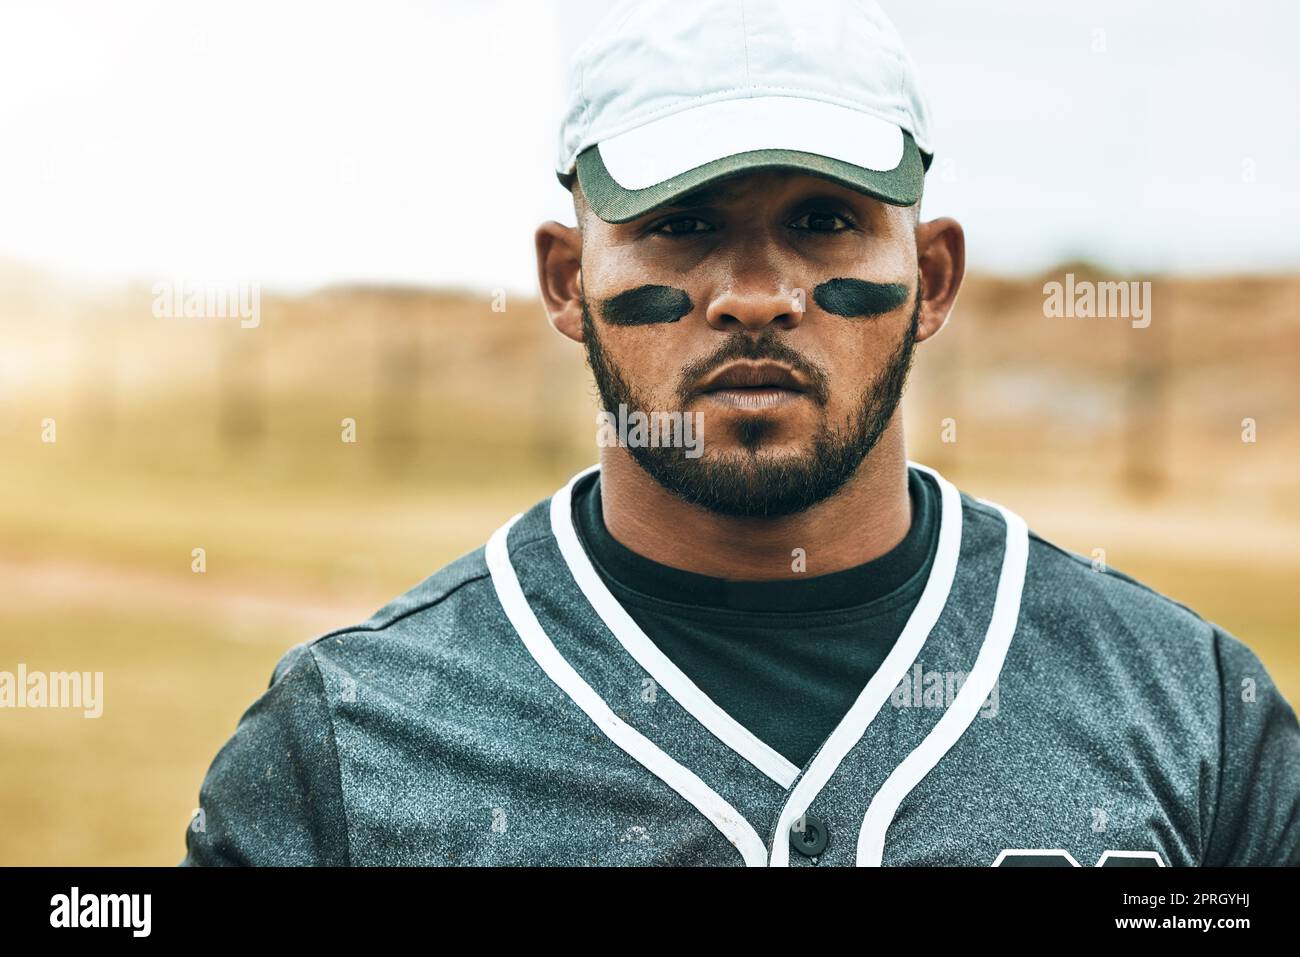 Photo of Baseball Player Wearing Eyeblack Stock Photo - Alamy